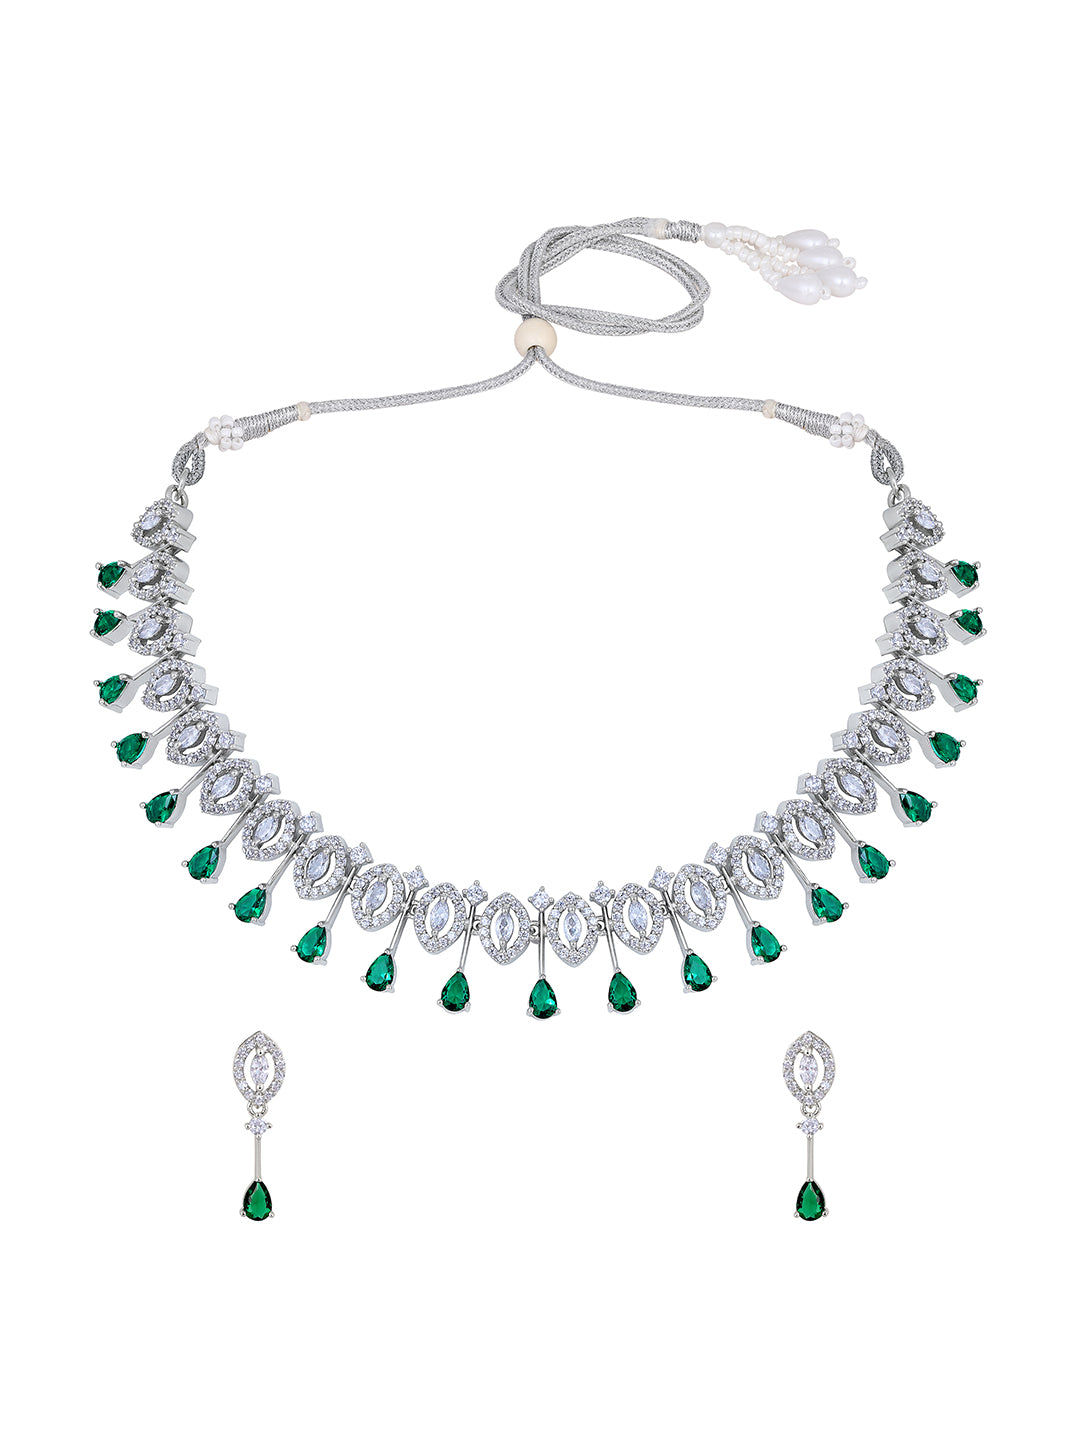 Stunning Eye-Catchy Silver Toned CZ-Studded Jewellery Set